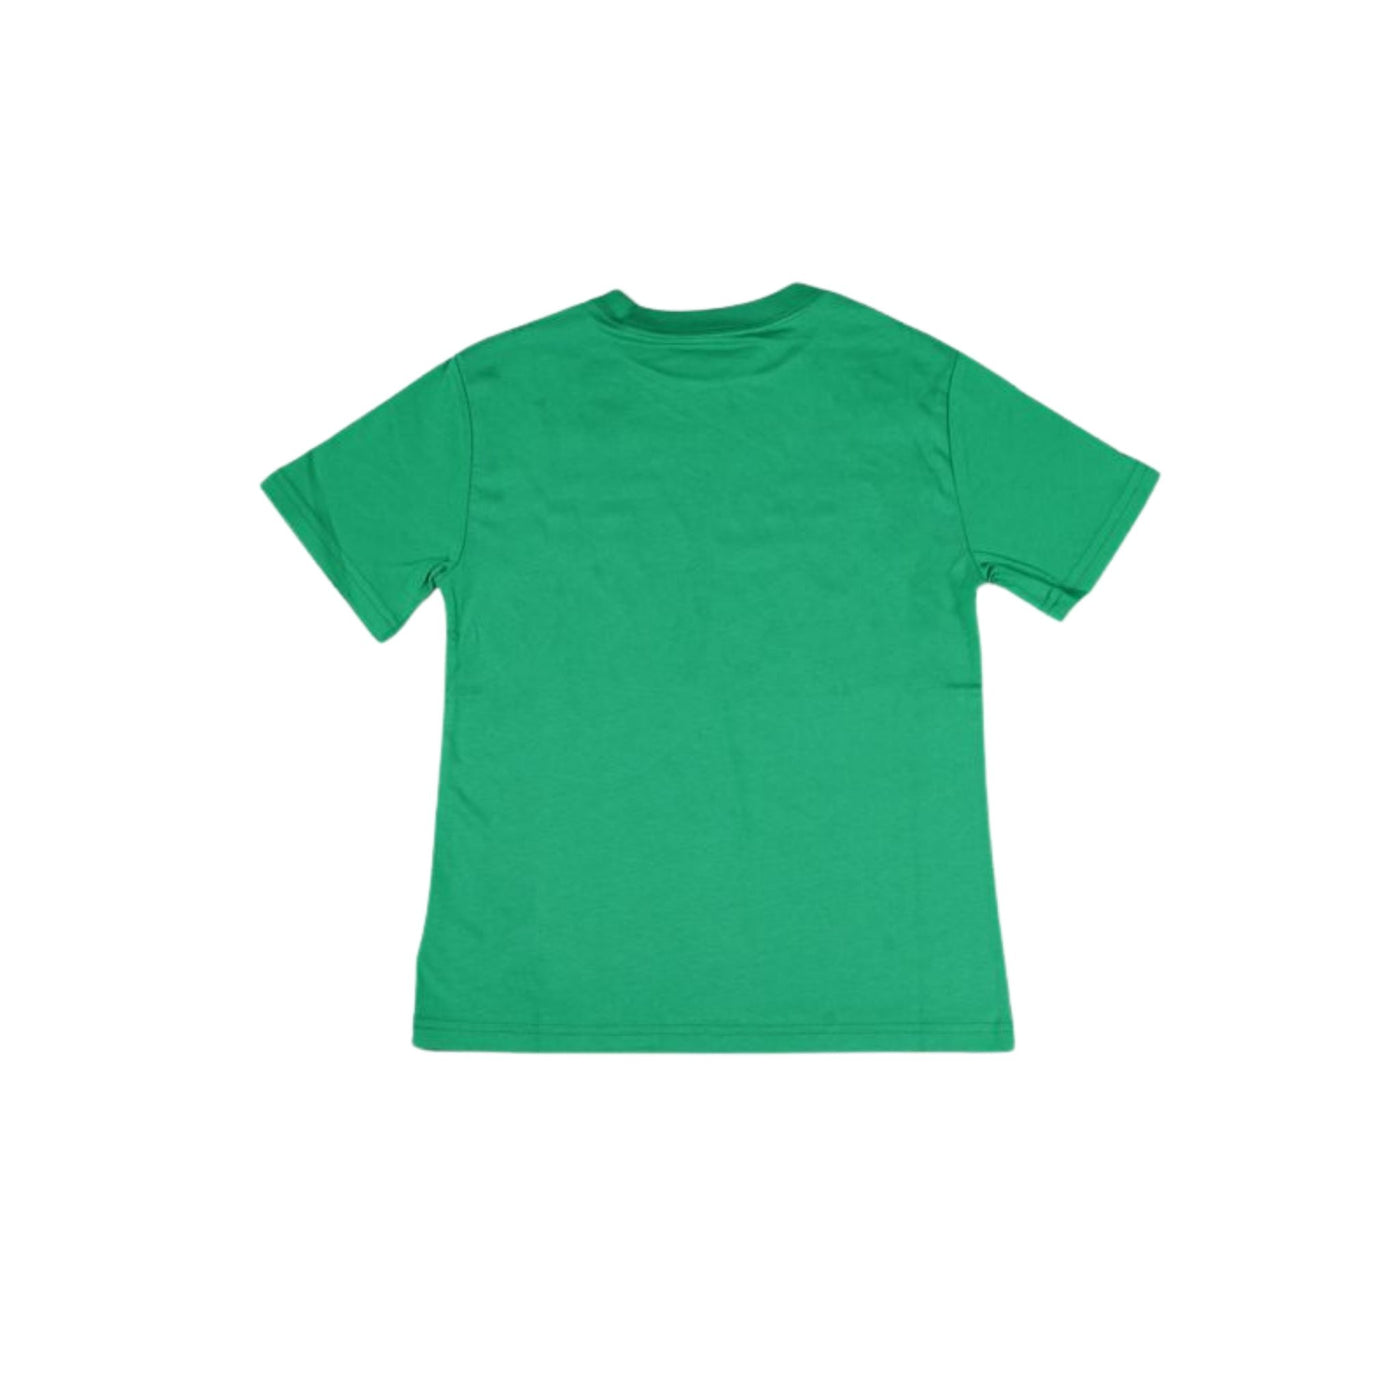 T-shirt verde bambino 2-4 anni polo ralph lauren vista retro